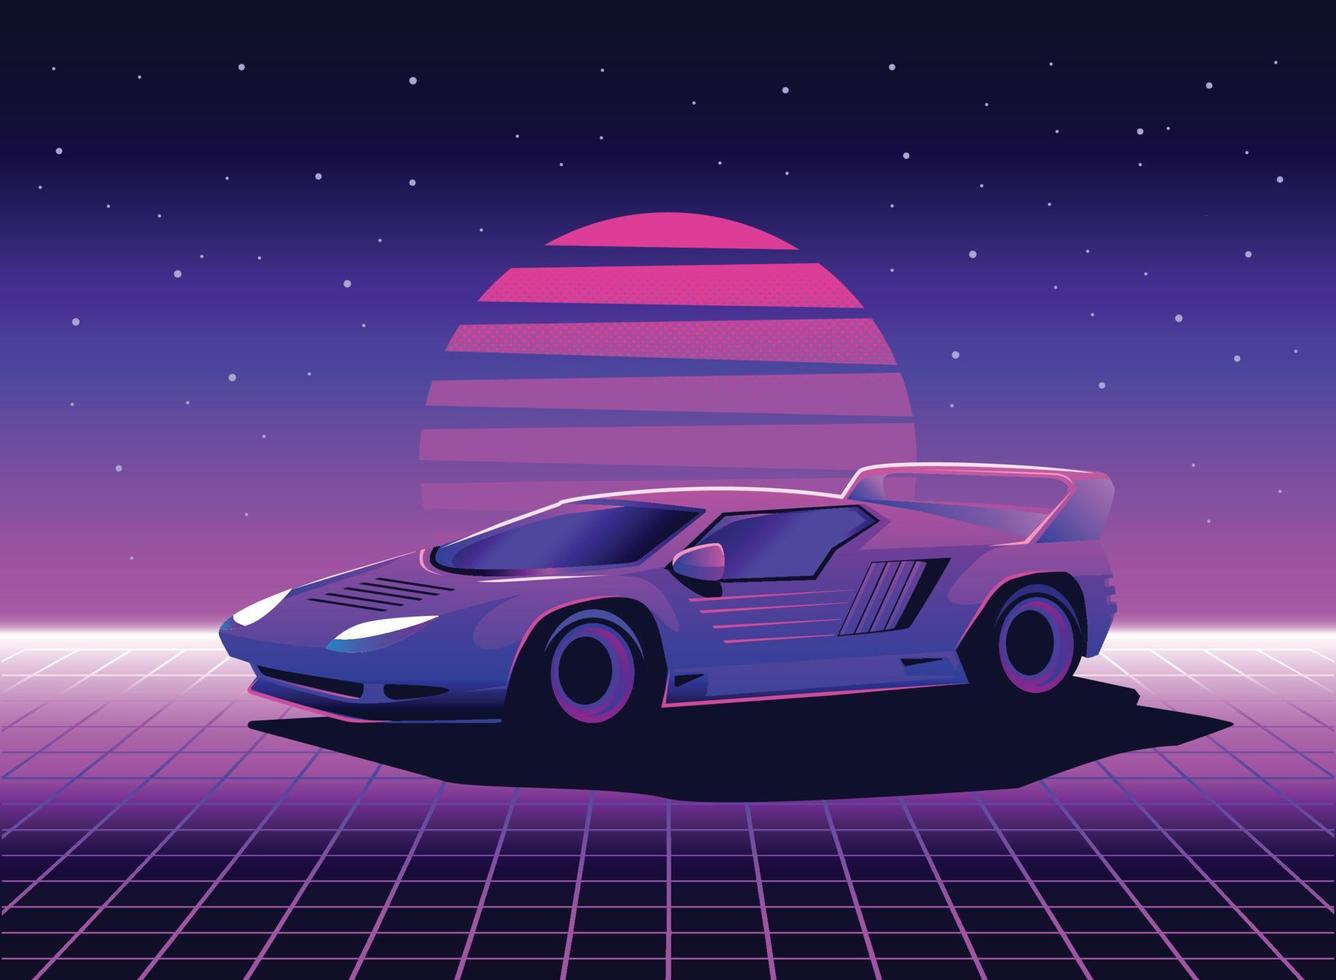 retro 80s sci-fi futuristische stijl achtergrond met supercar. vector retro futuristische synth Golf illustratie in Jaren 80 posters stijl. retro nostalgisch dampgolf cyberpunk artwork met levendig neon kleuren